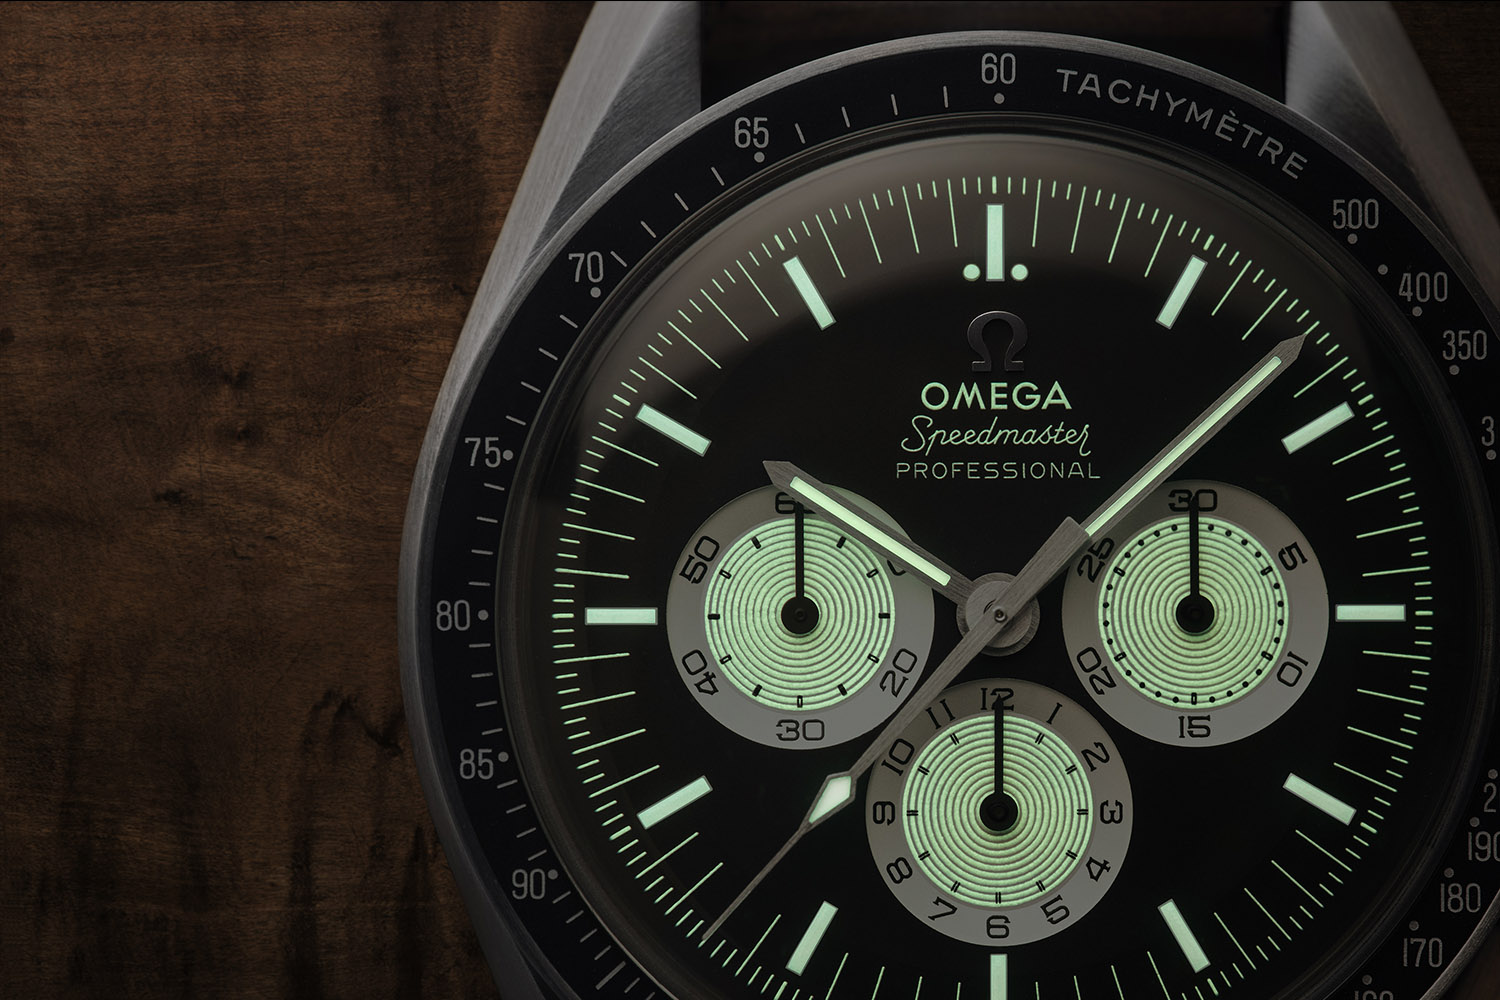 Omega Speedmaster Speedy Tuesday Limited Edition - Specs & Price